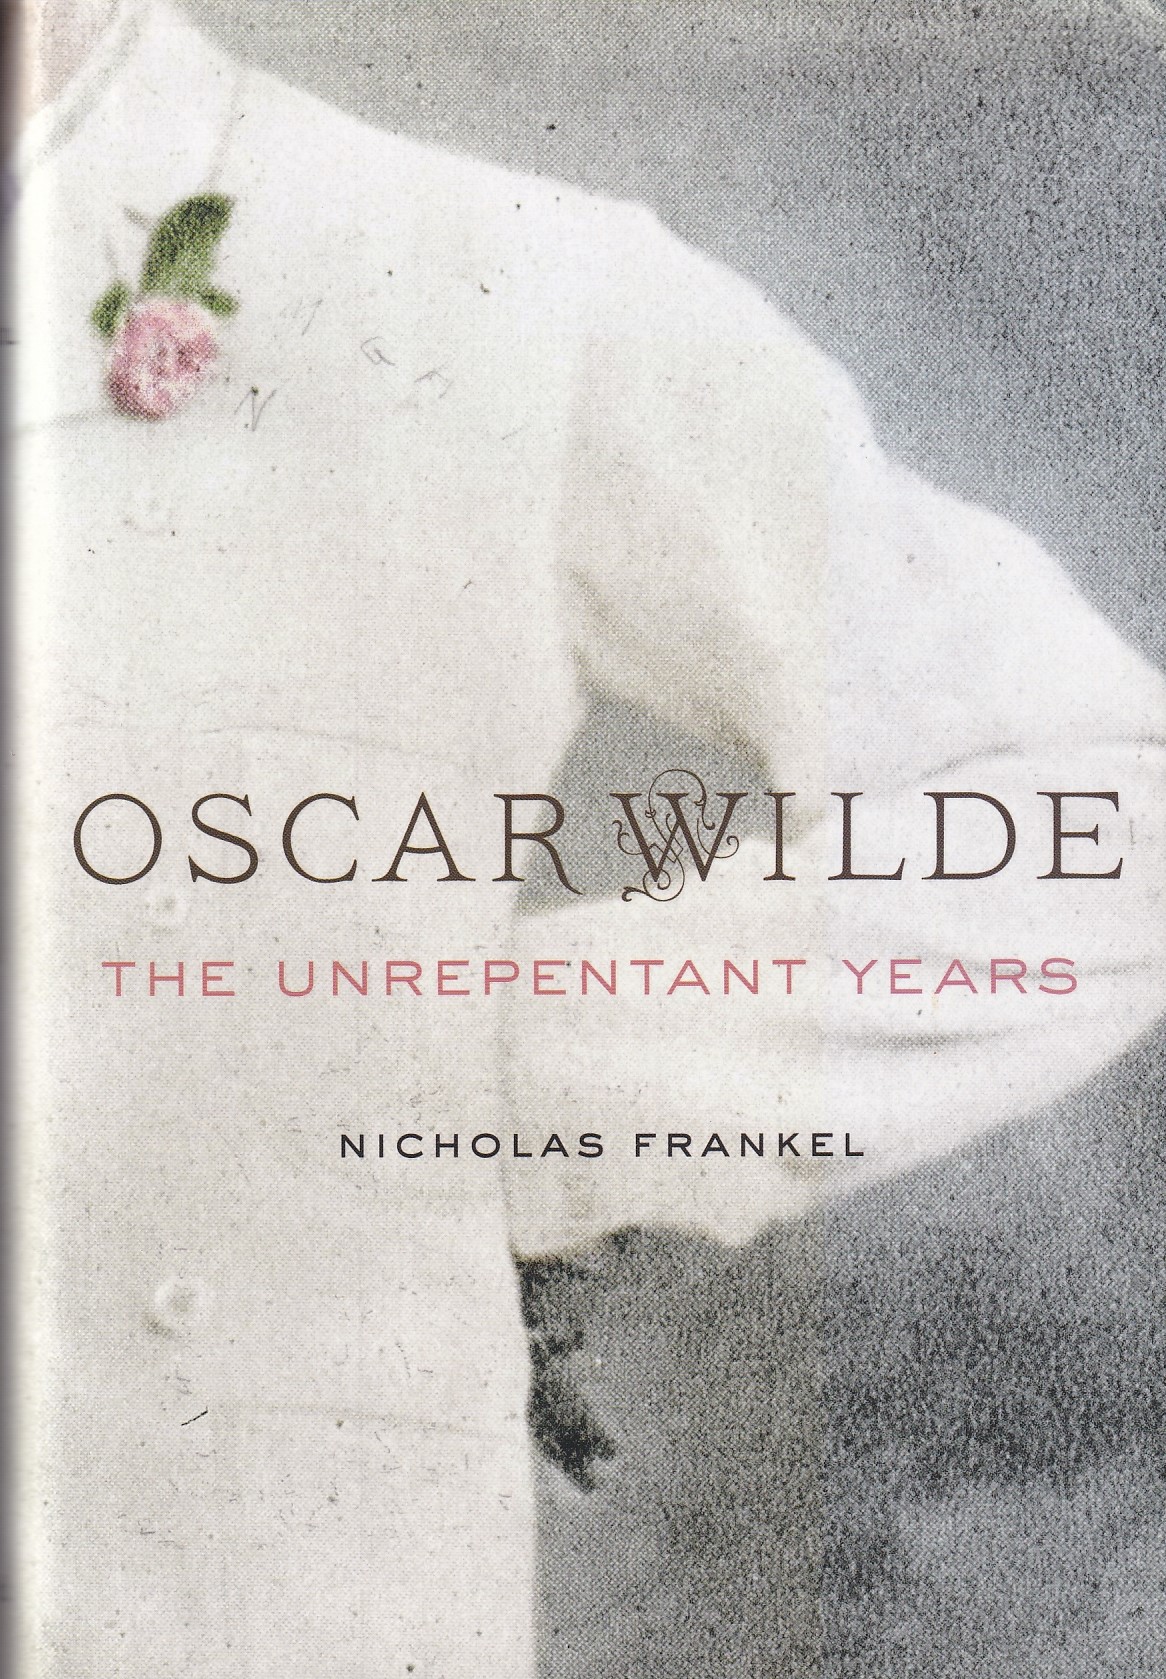 Oscar Wilde: The Unrepentant Years by Nicholas Frankel